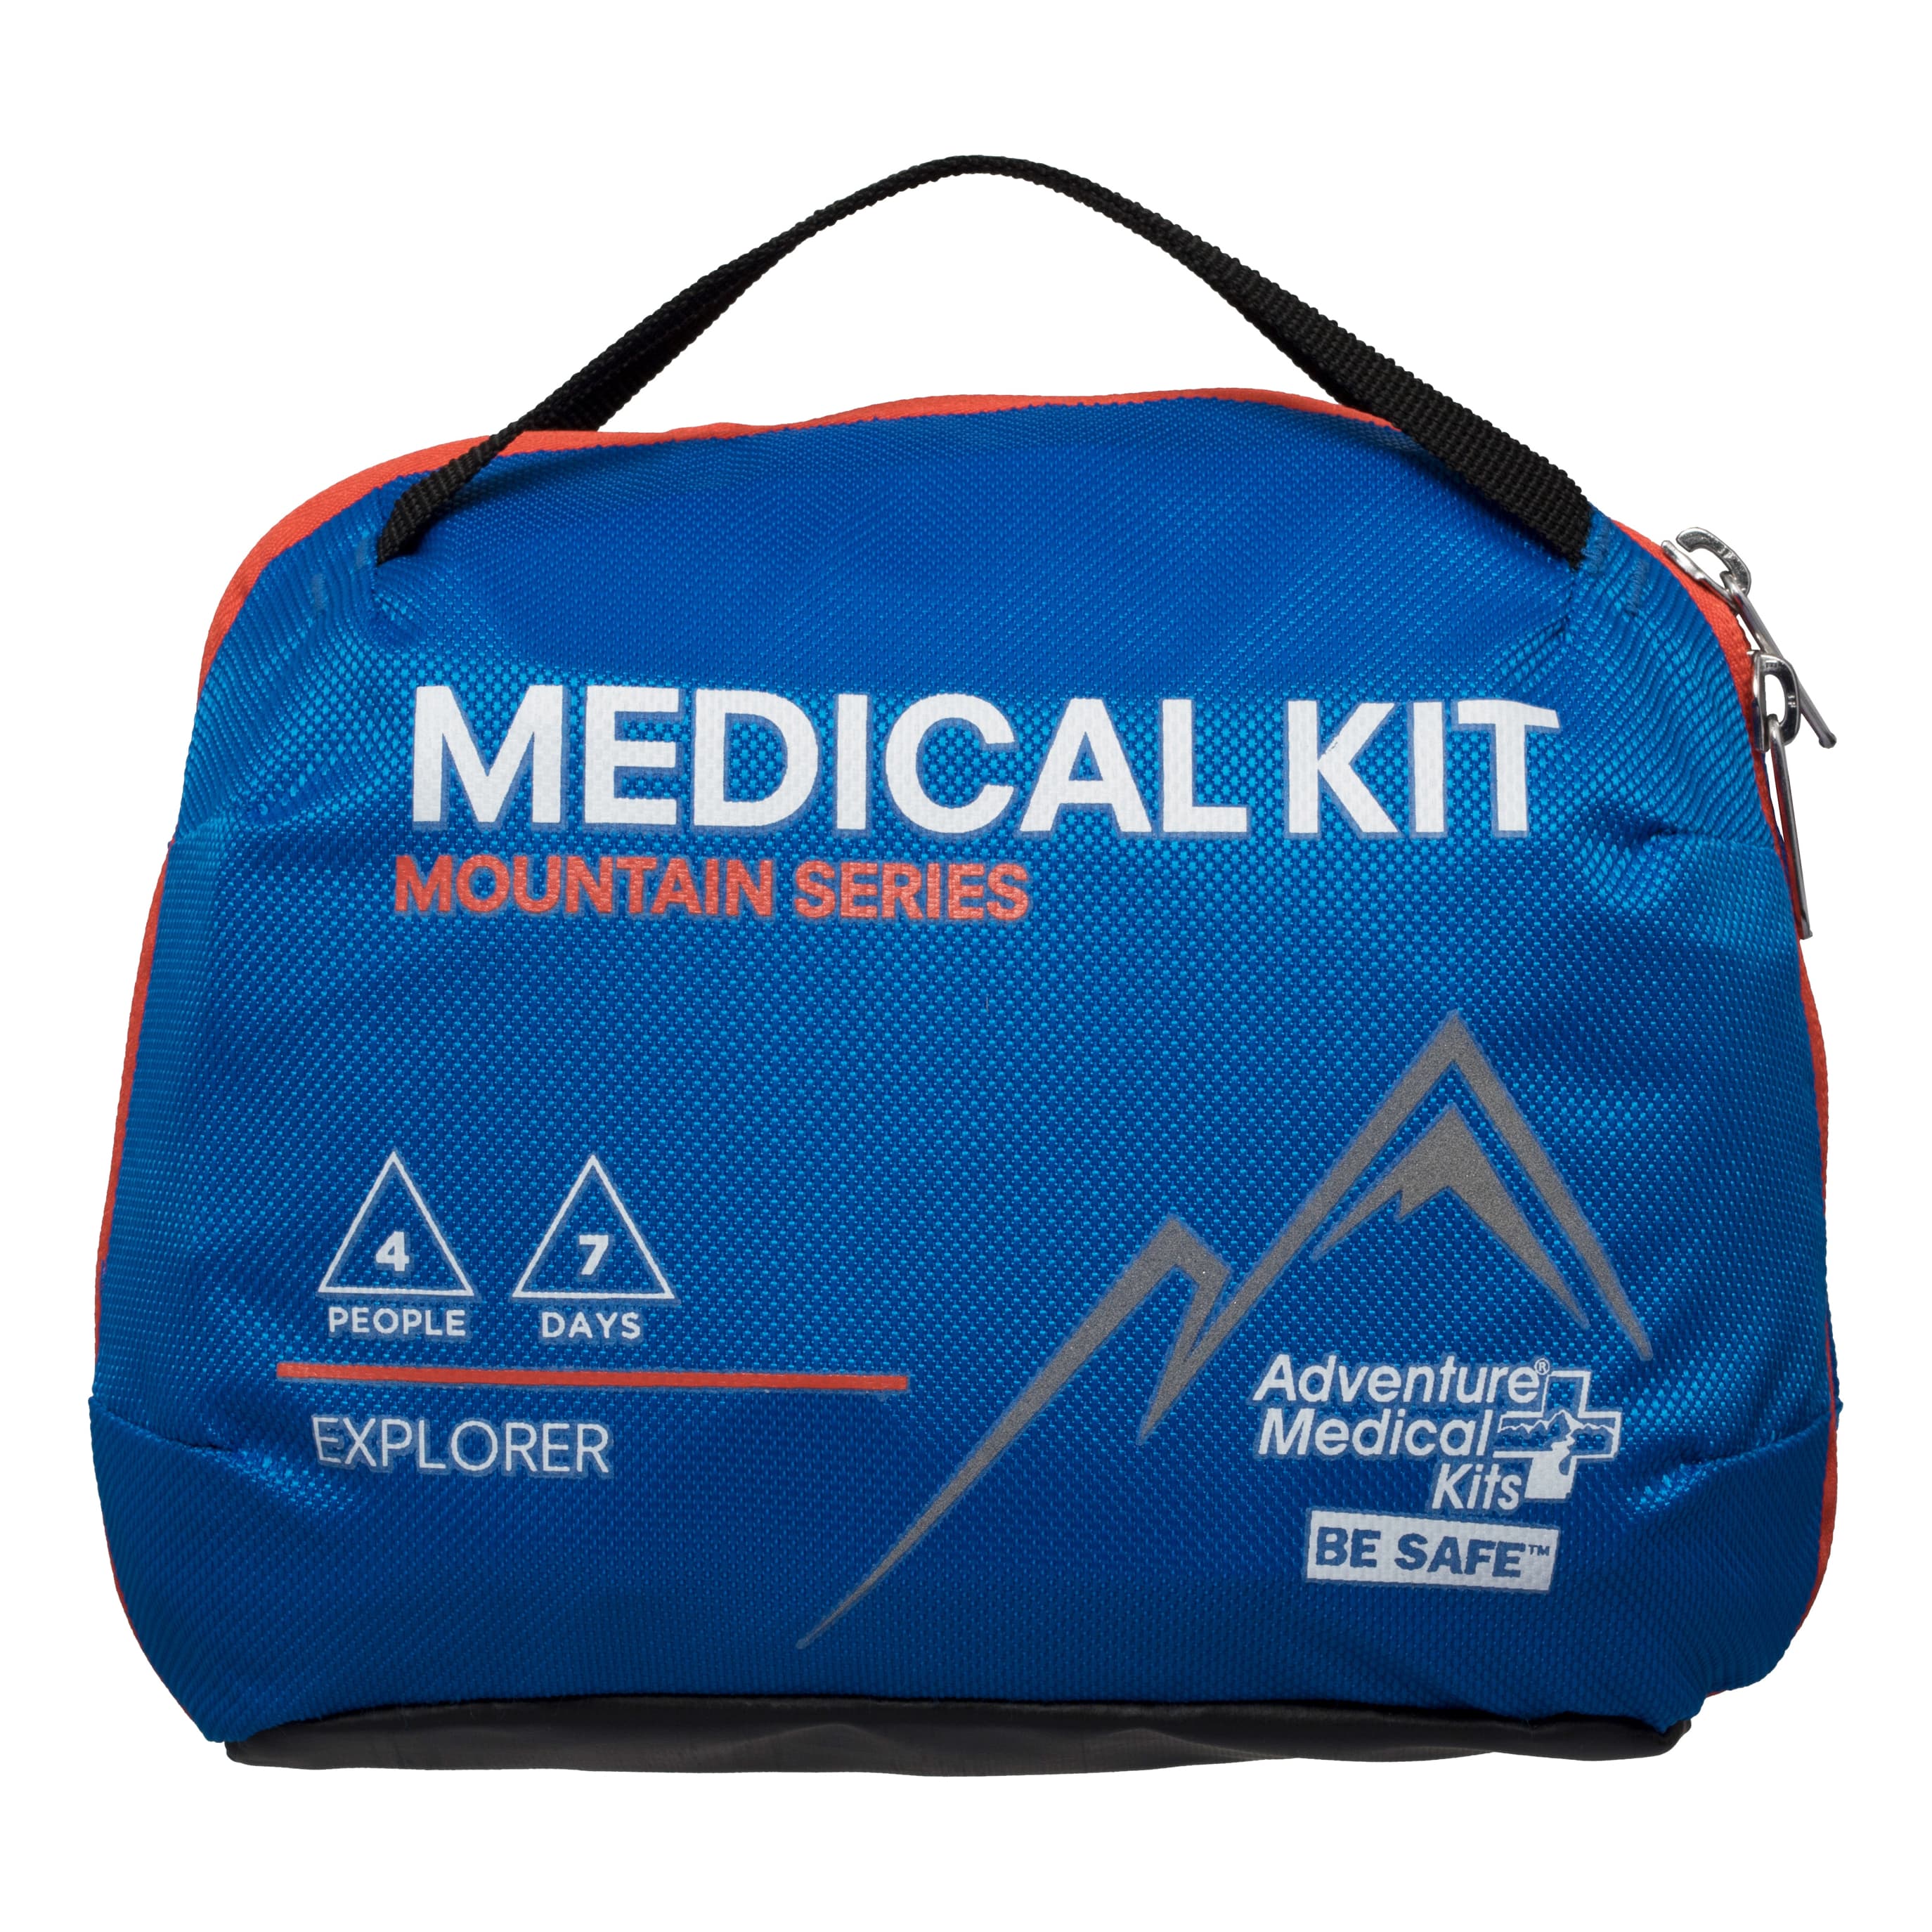 Adventure Medical Kits® Mountain Series Explorer Medical Kit